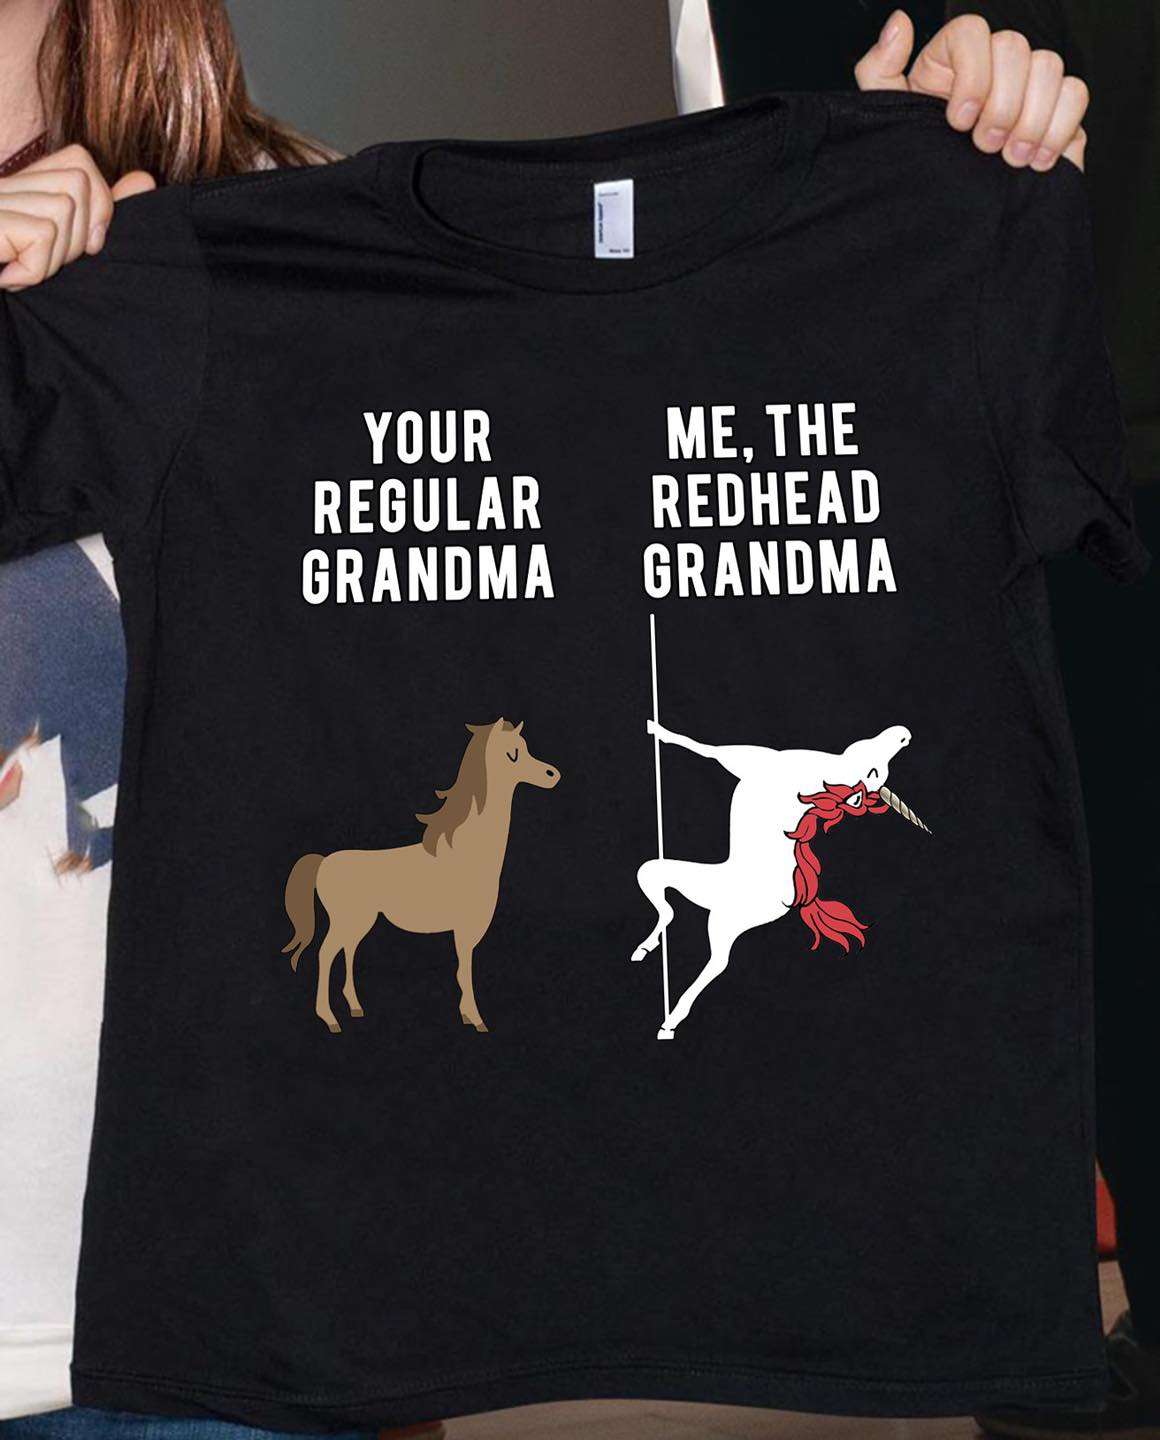 Your regular grandma - The redhead grandma, unicorn grandma, gift for grandma